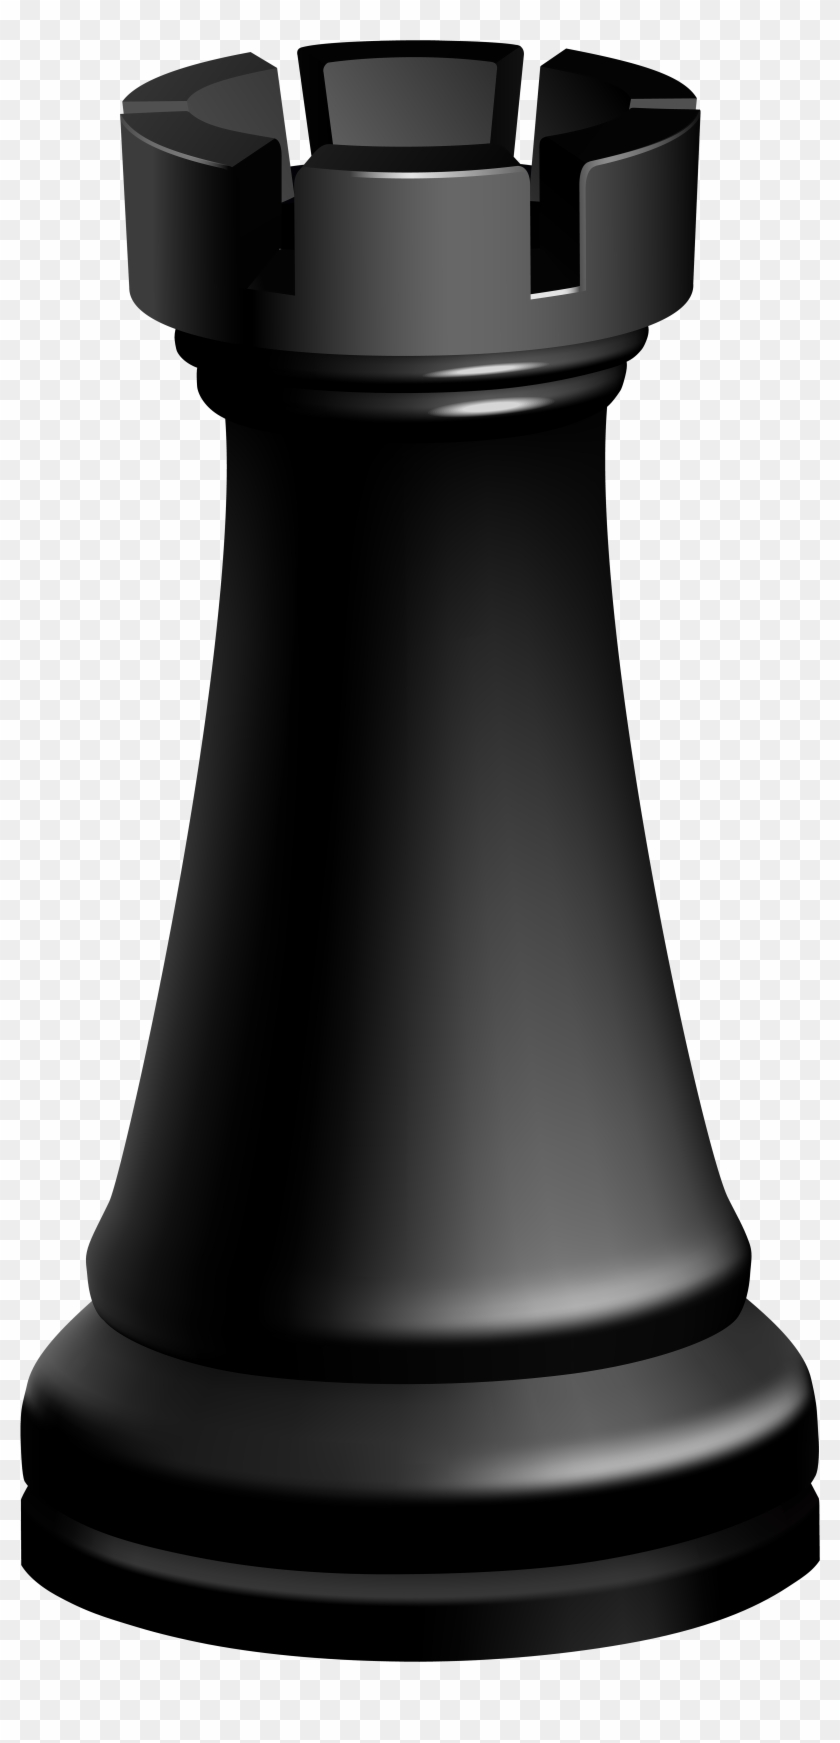 Rook Black Chess Piece Clip Art - Chess Pieces Transparent Png #1695552